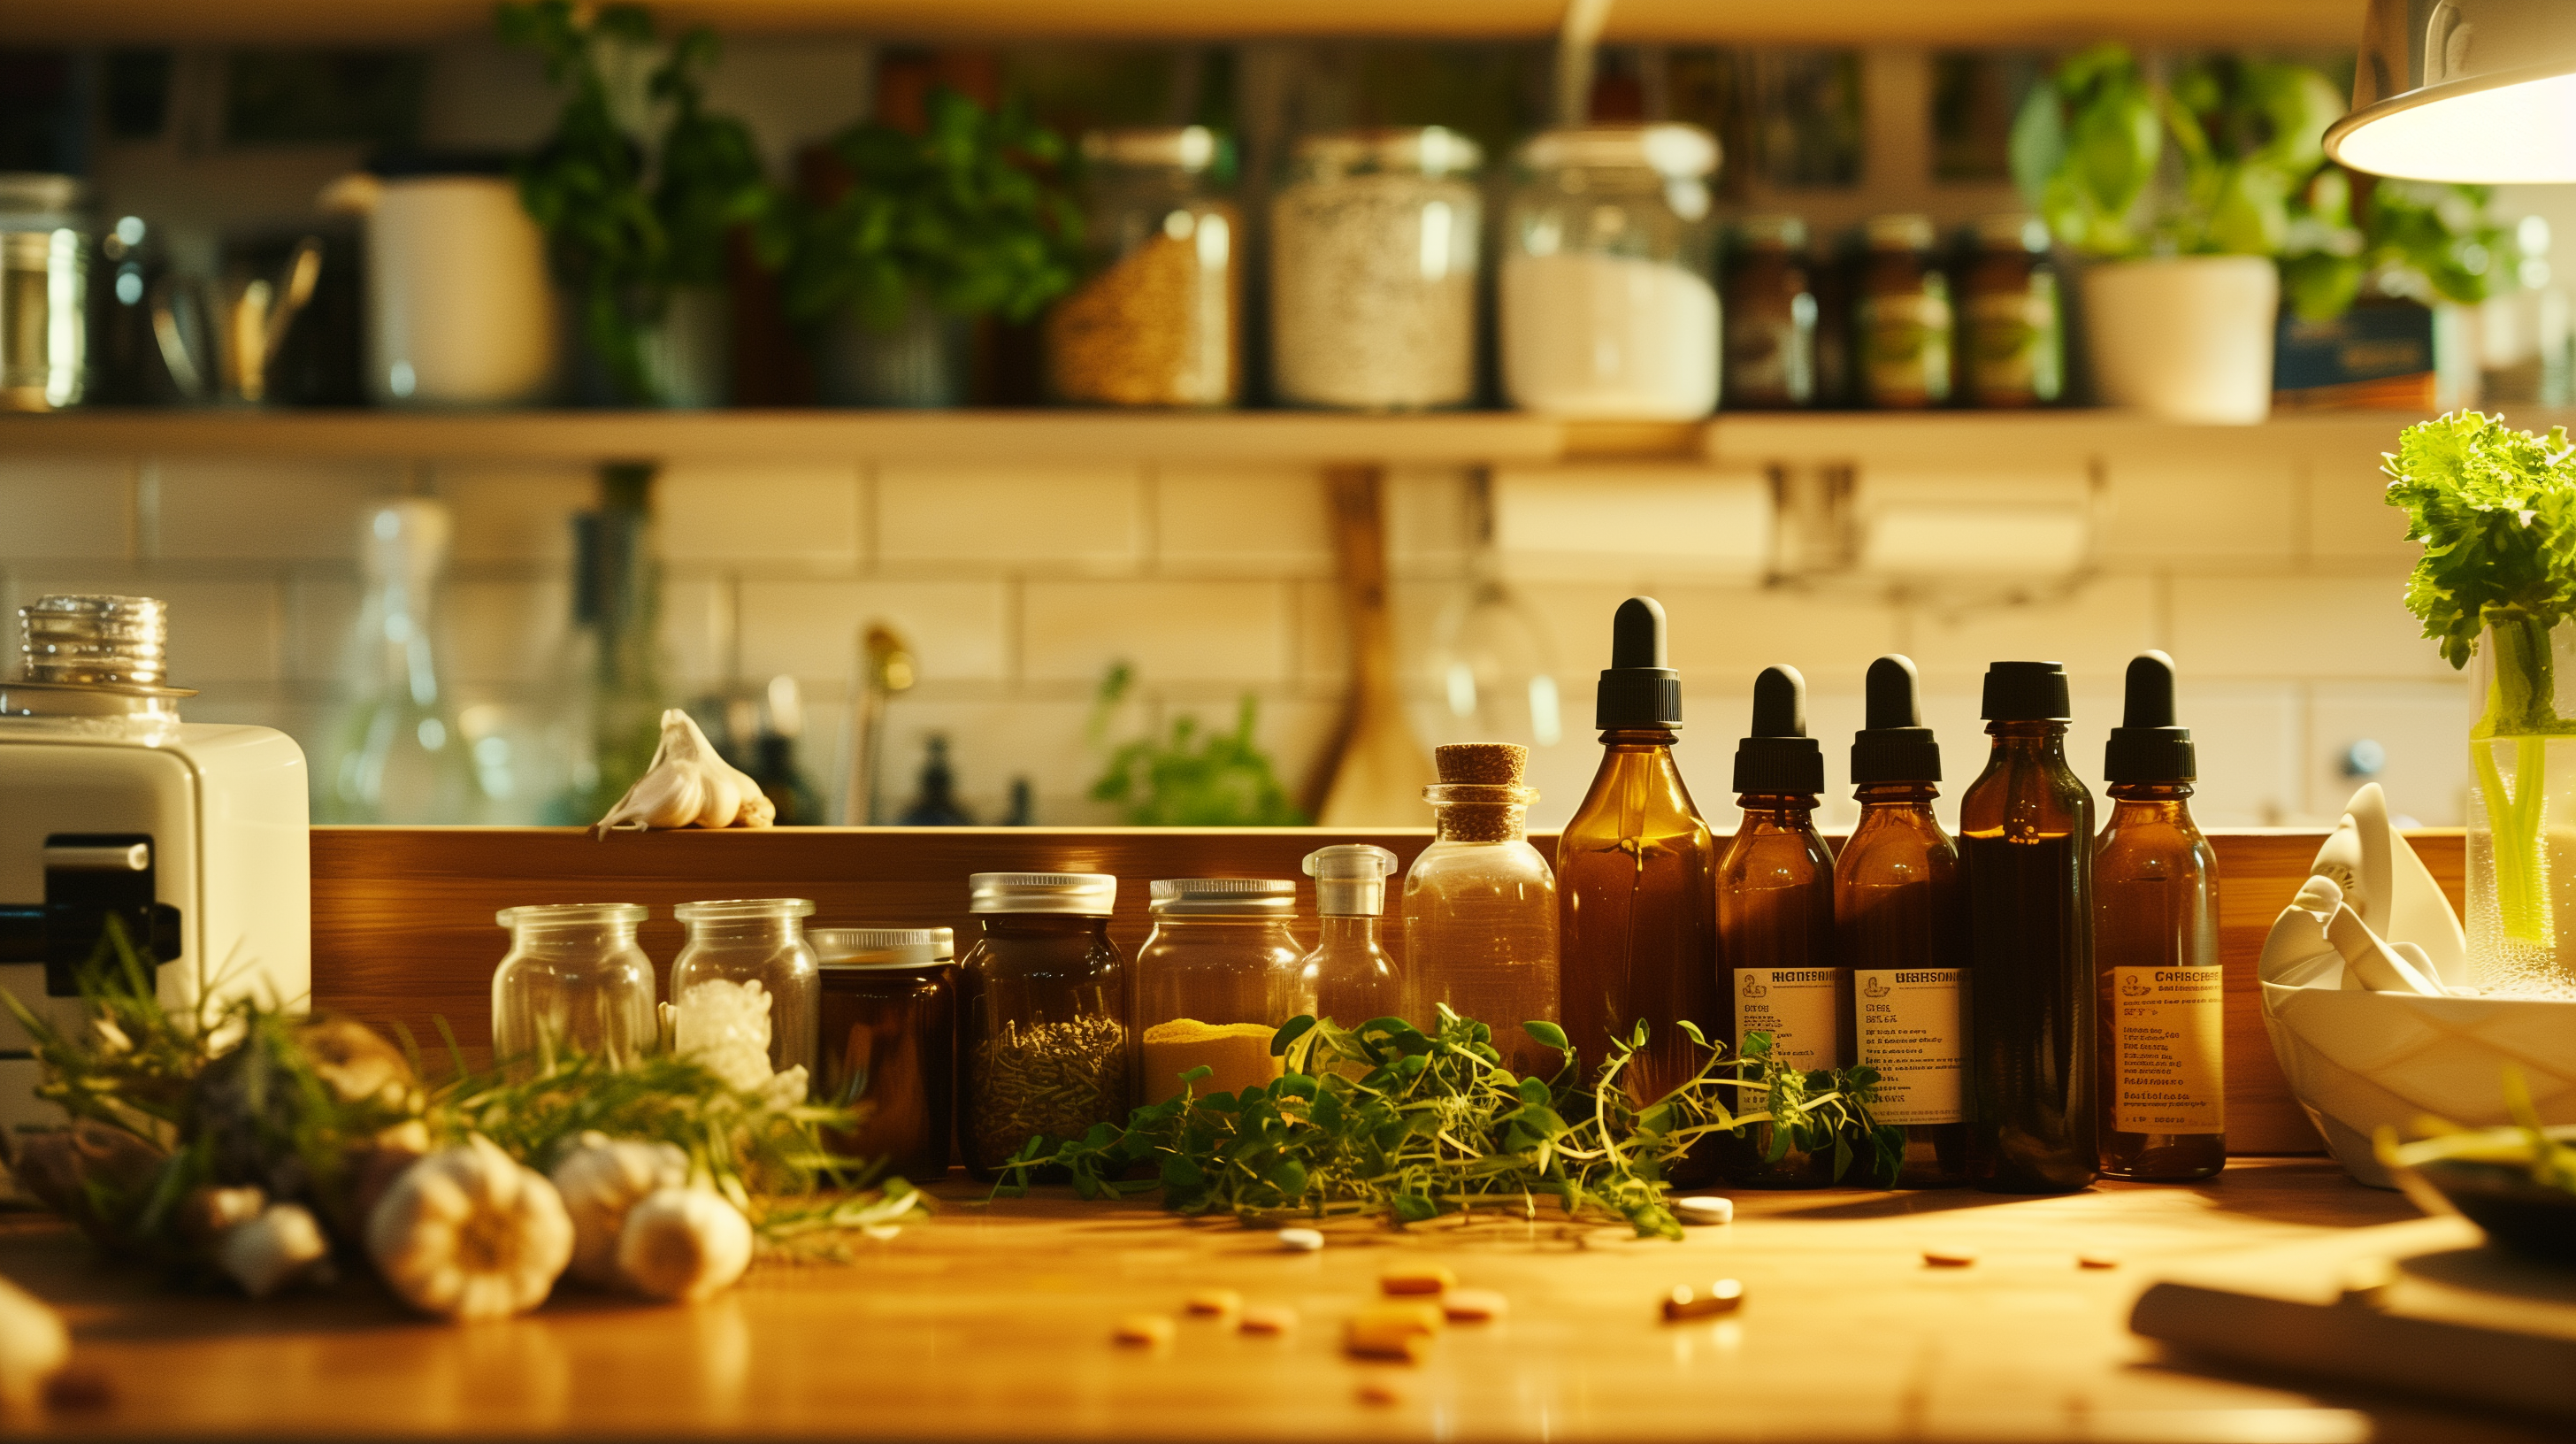 kitchen counter with medication bottles, herbs like ginseng, st. john's wort, garlic